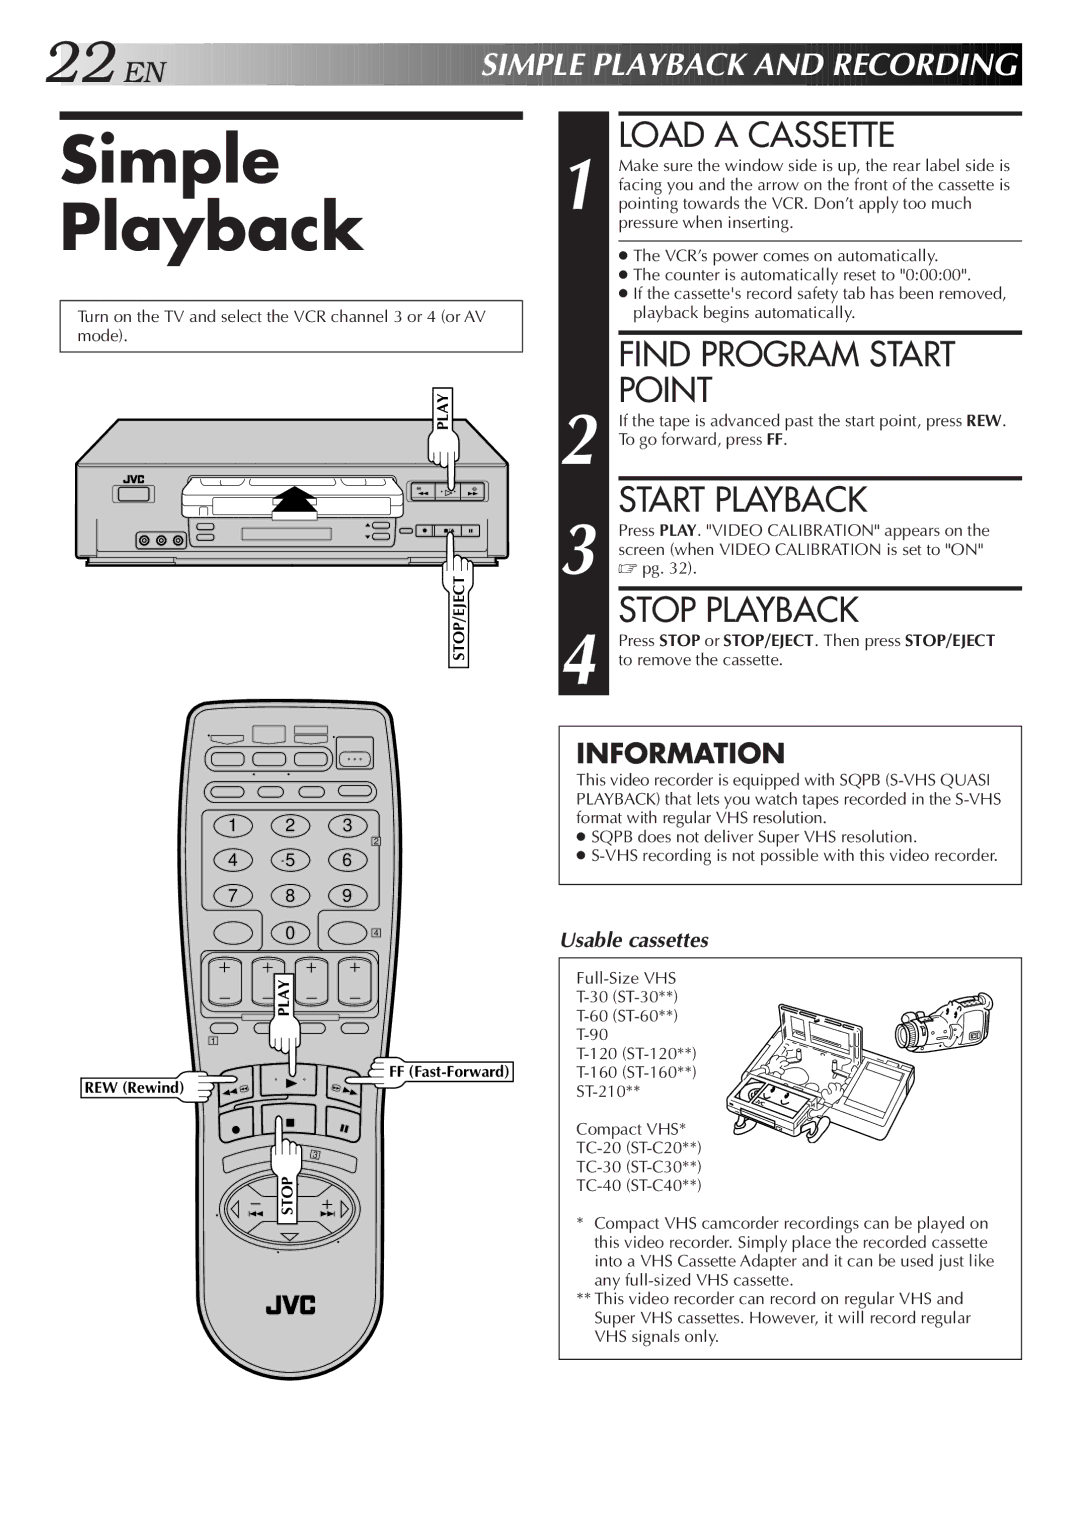 JVC HR-VP656U manual Simple Playback, Load a Cassette, Find Program Start Point, Start Playback, Stop Playback 